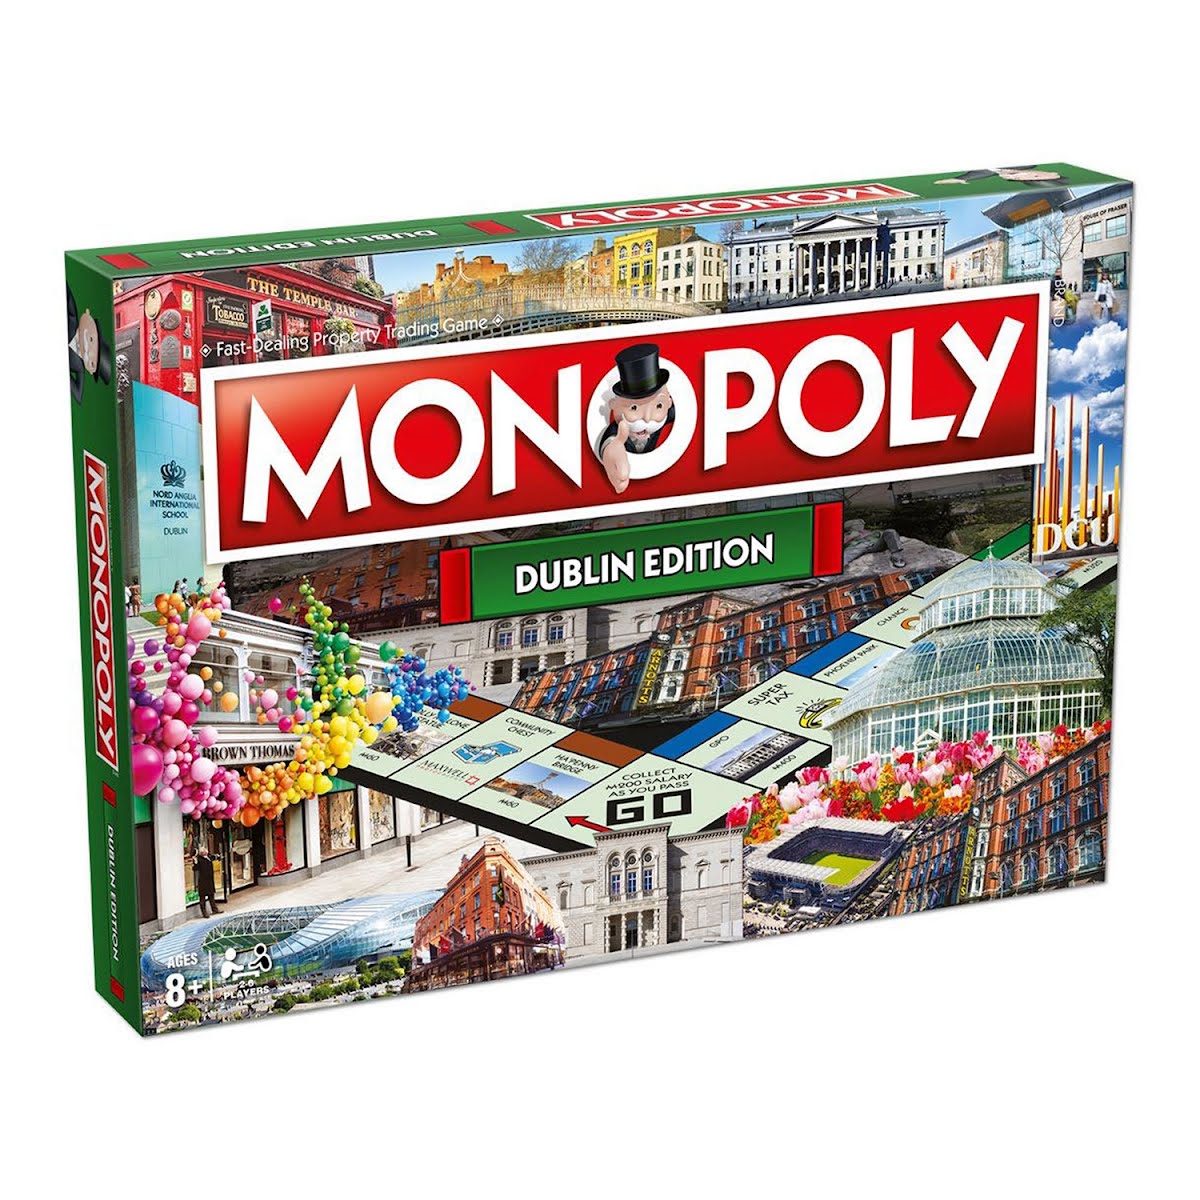 Monopoly Dublin Edition, €35